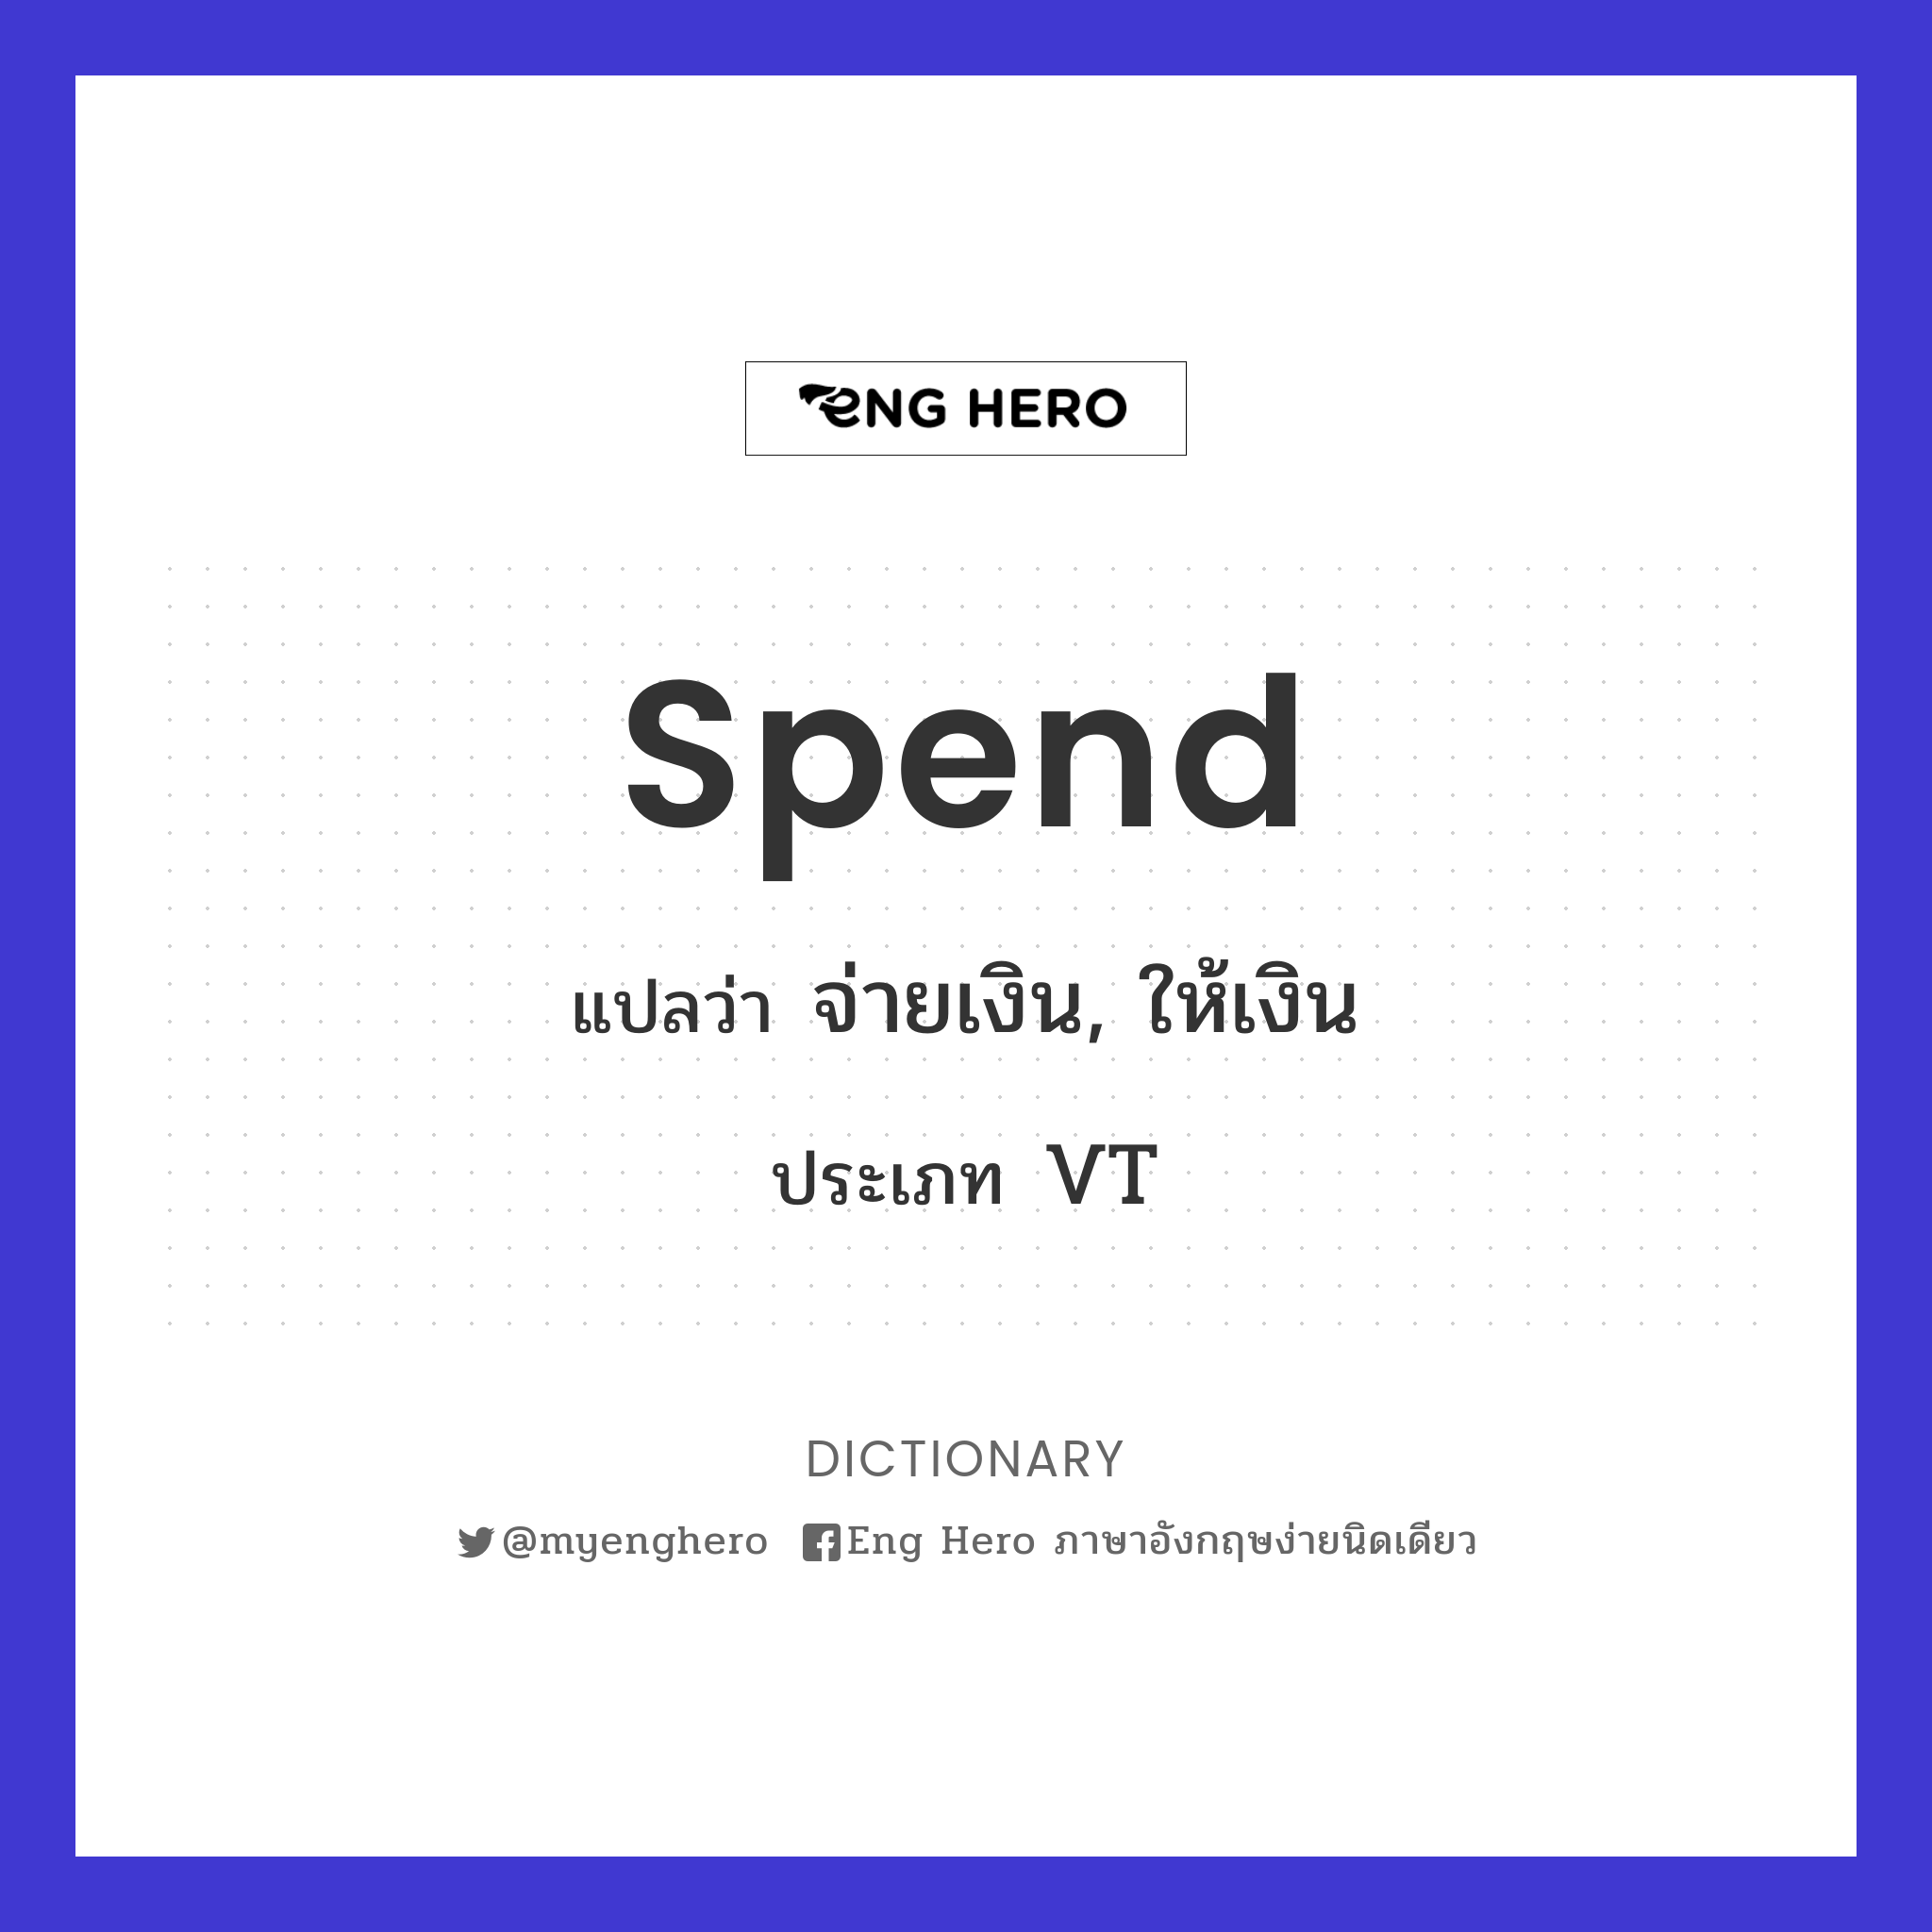 spend